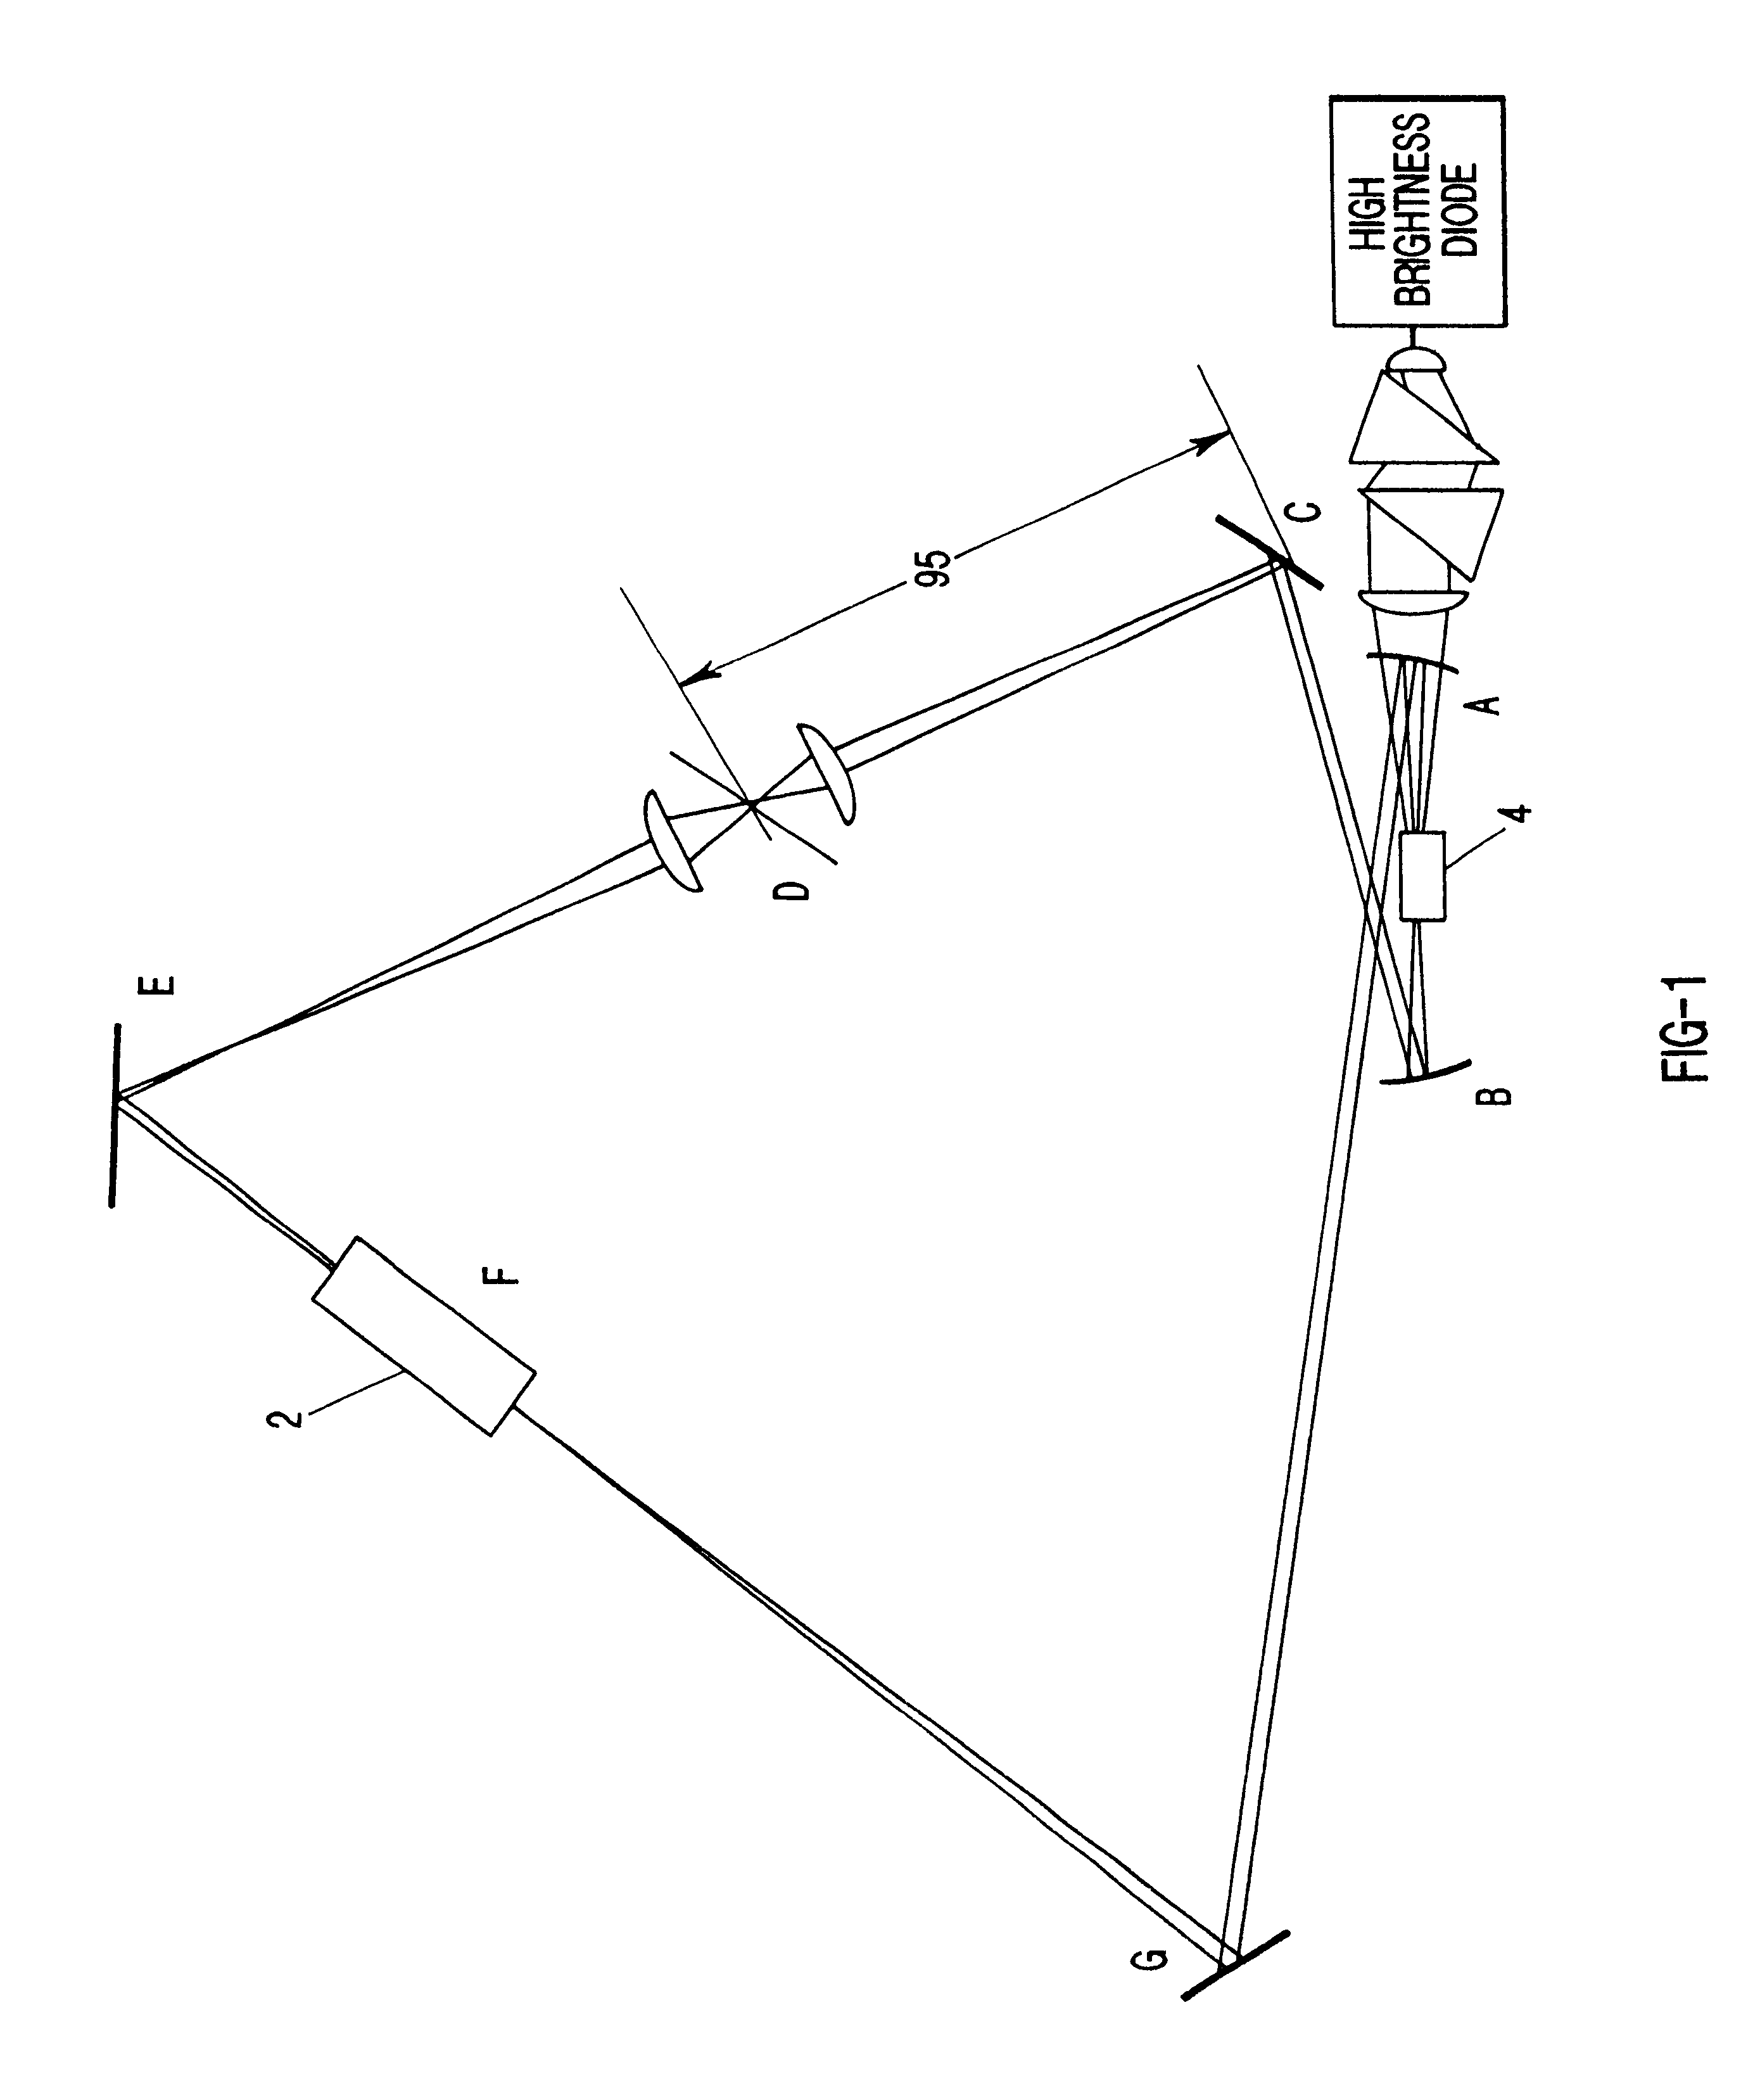 Bi-directional short pulse ring laser